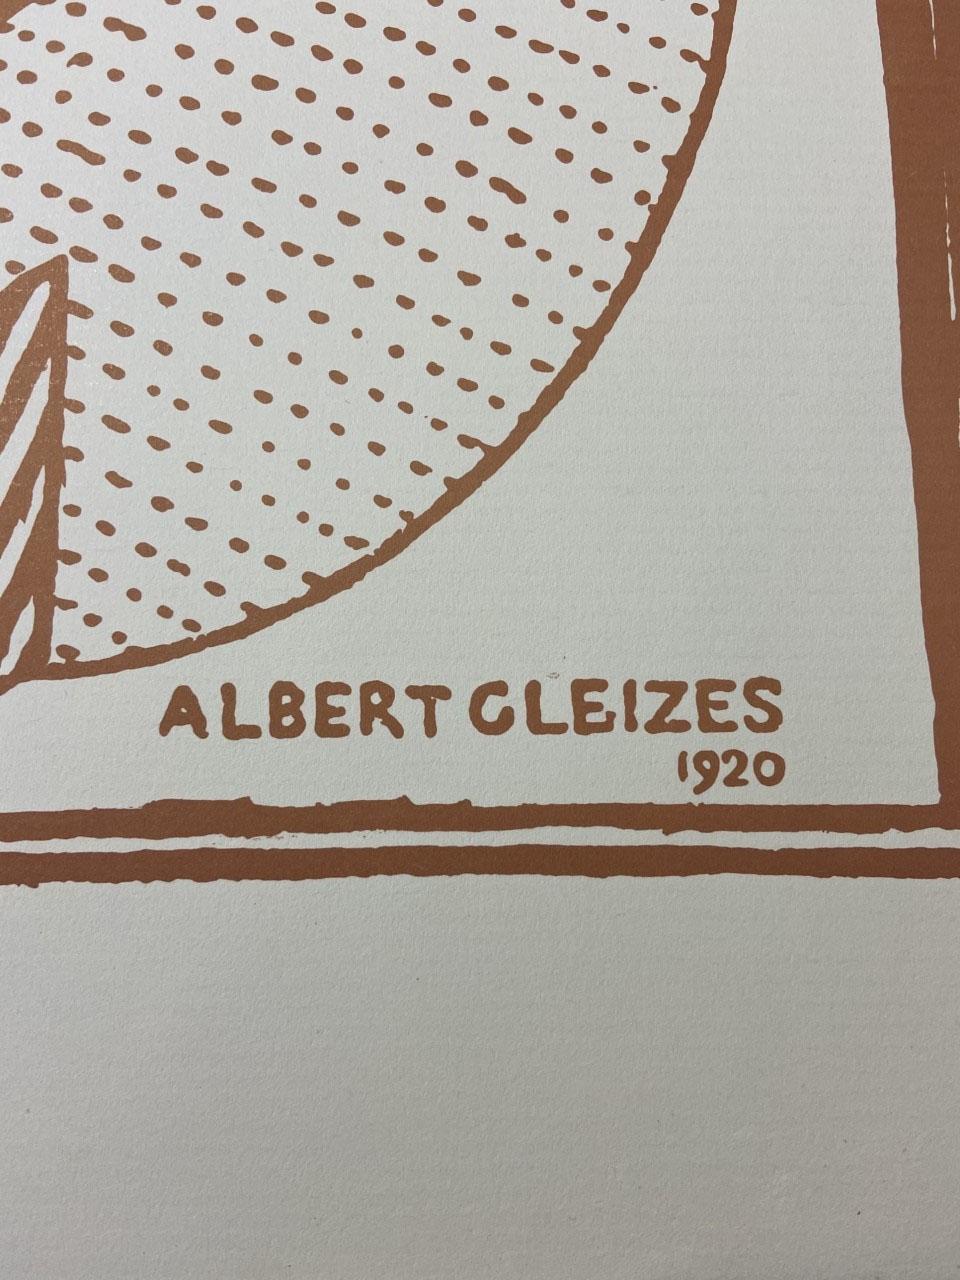 Albert Gleizes  print 1920 Orchard paper 2